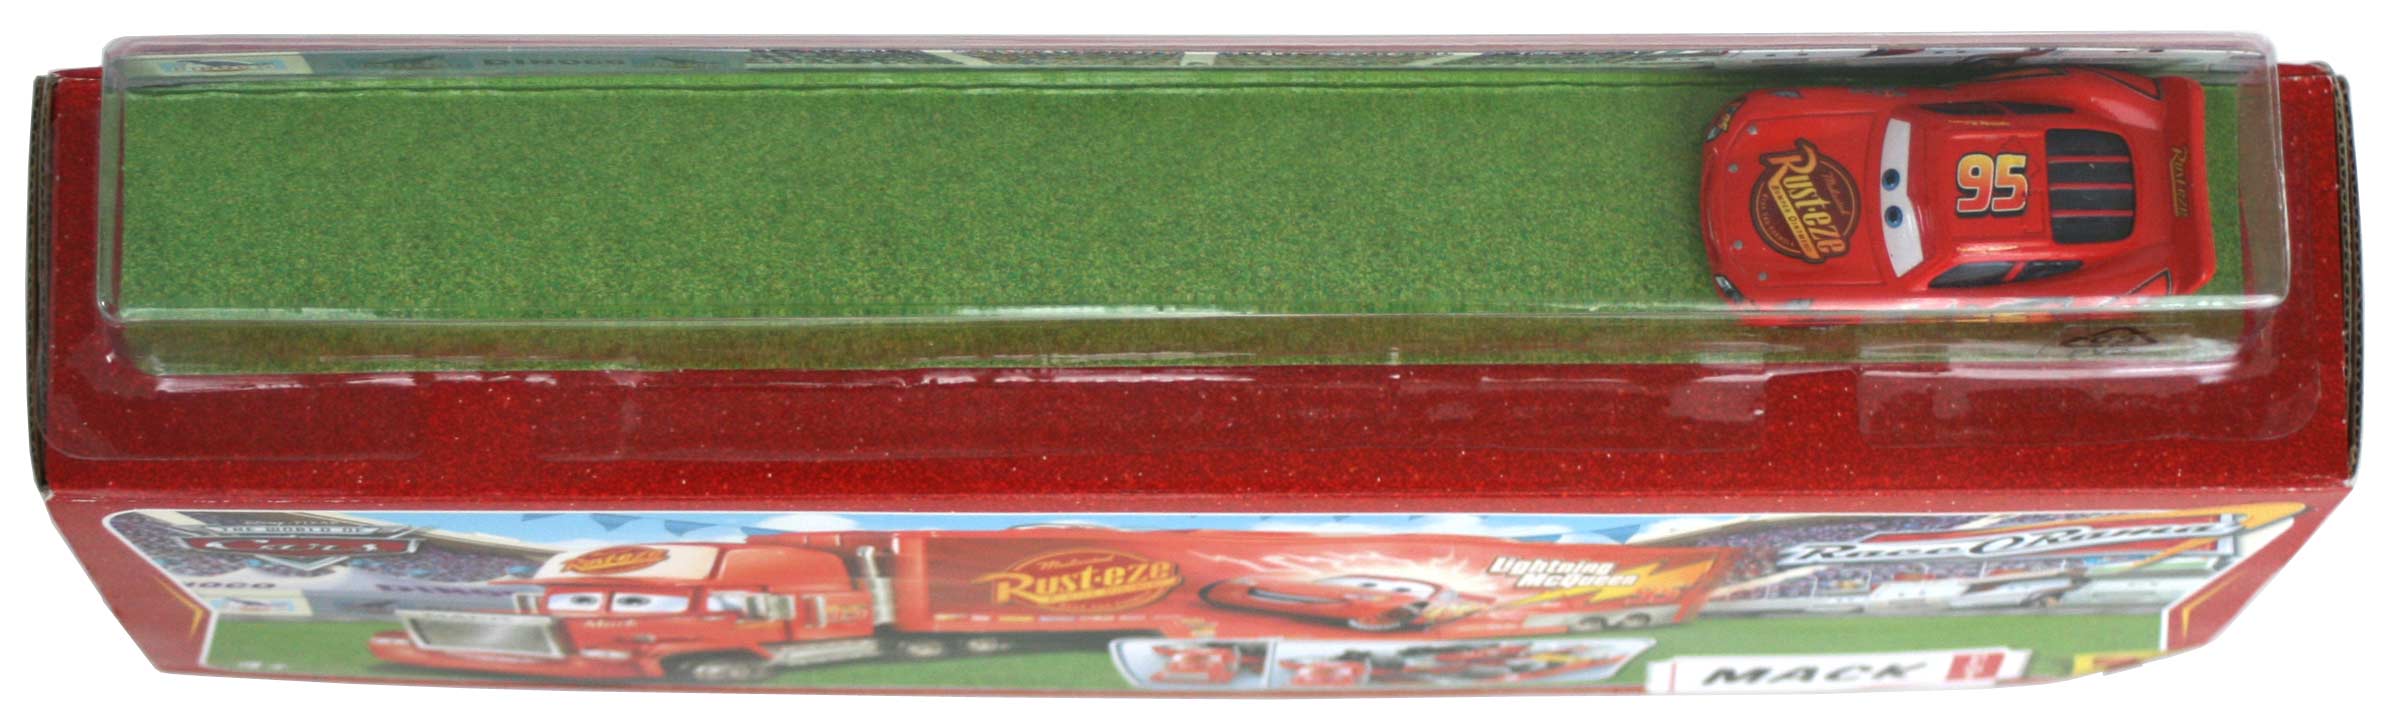 Mack - Cars - Mattel (Packaging)